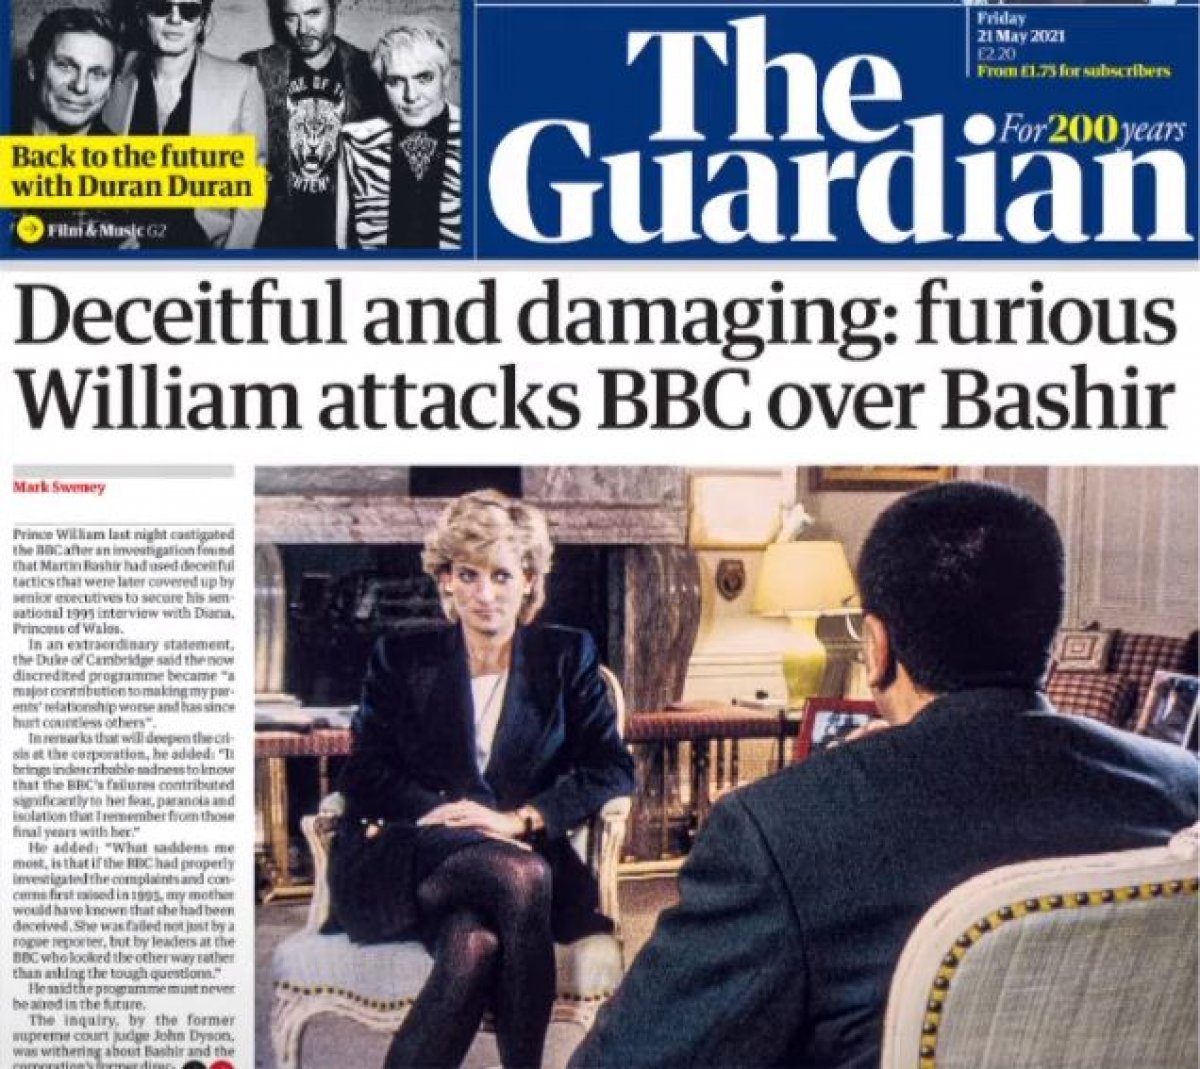 The agenda in England BBC's Princess Diana interview #3